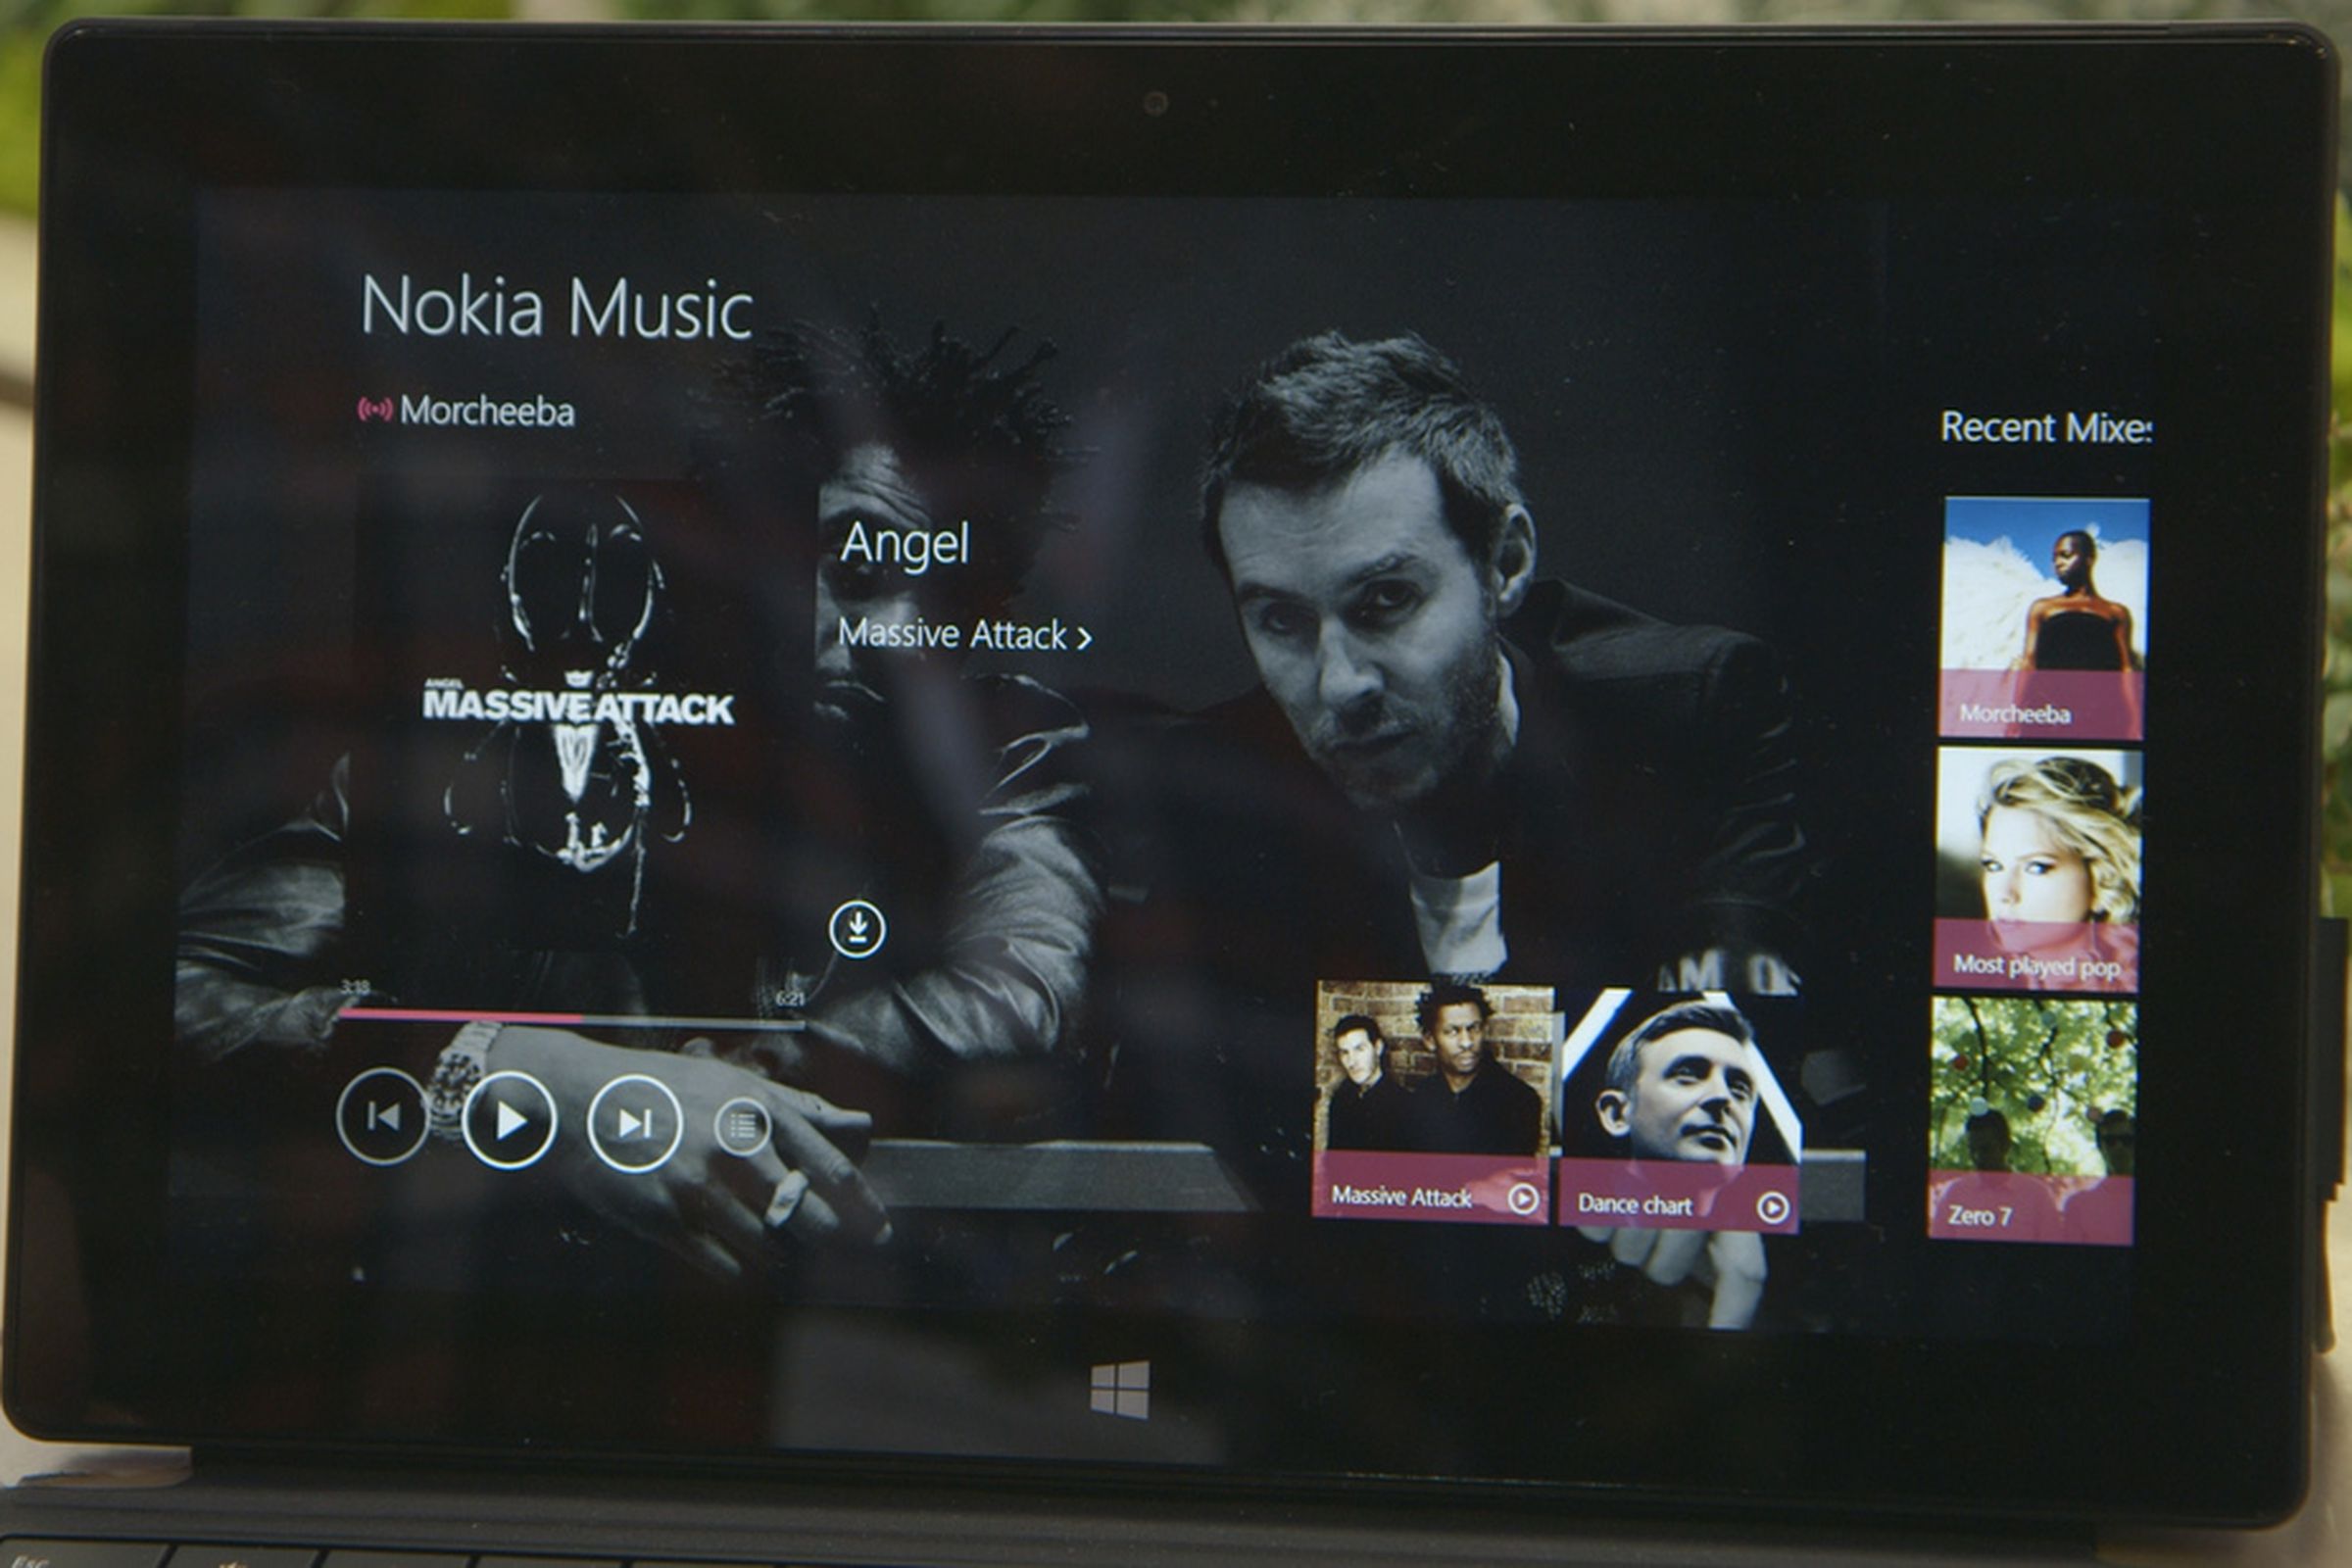 Nokia Music Windows 8